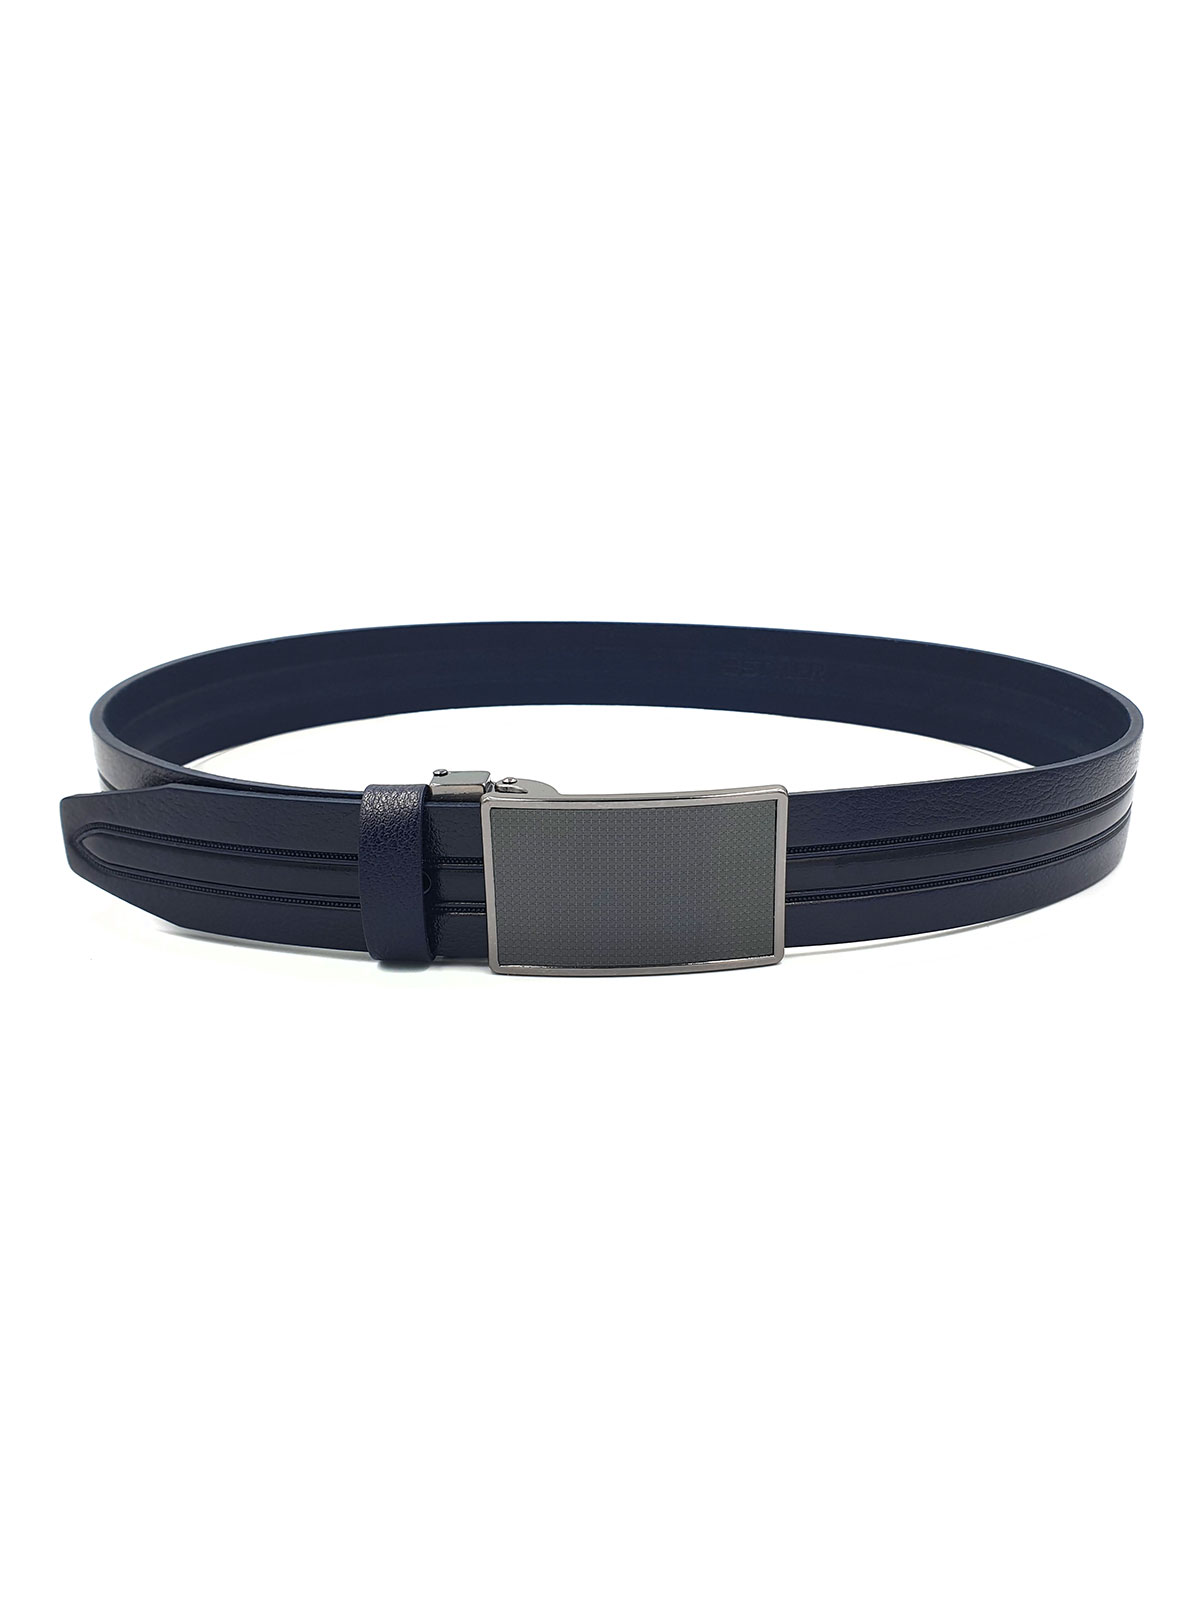 Dark blue belt with metal plate - 10426 - € 24.75 img2